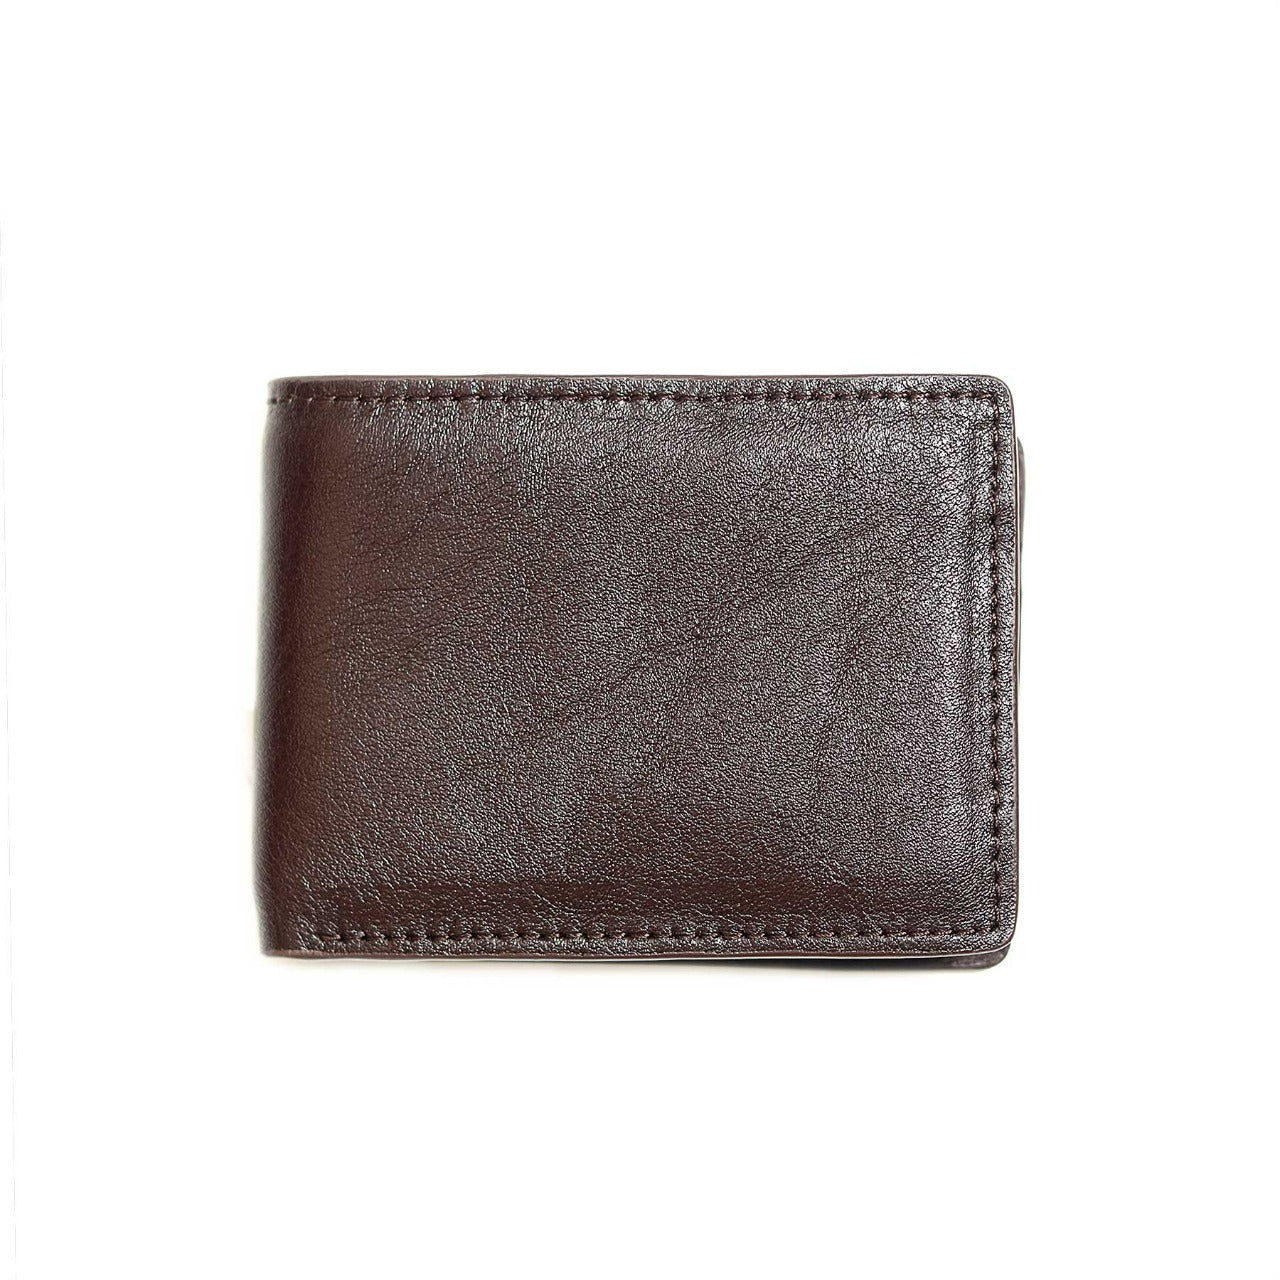 Zays Premium Leather Multifunctional Mini Wallet for Unisex (WL40)